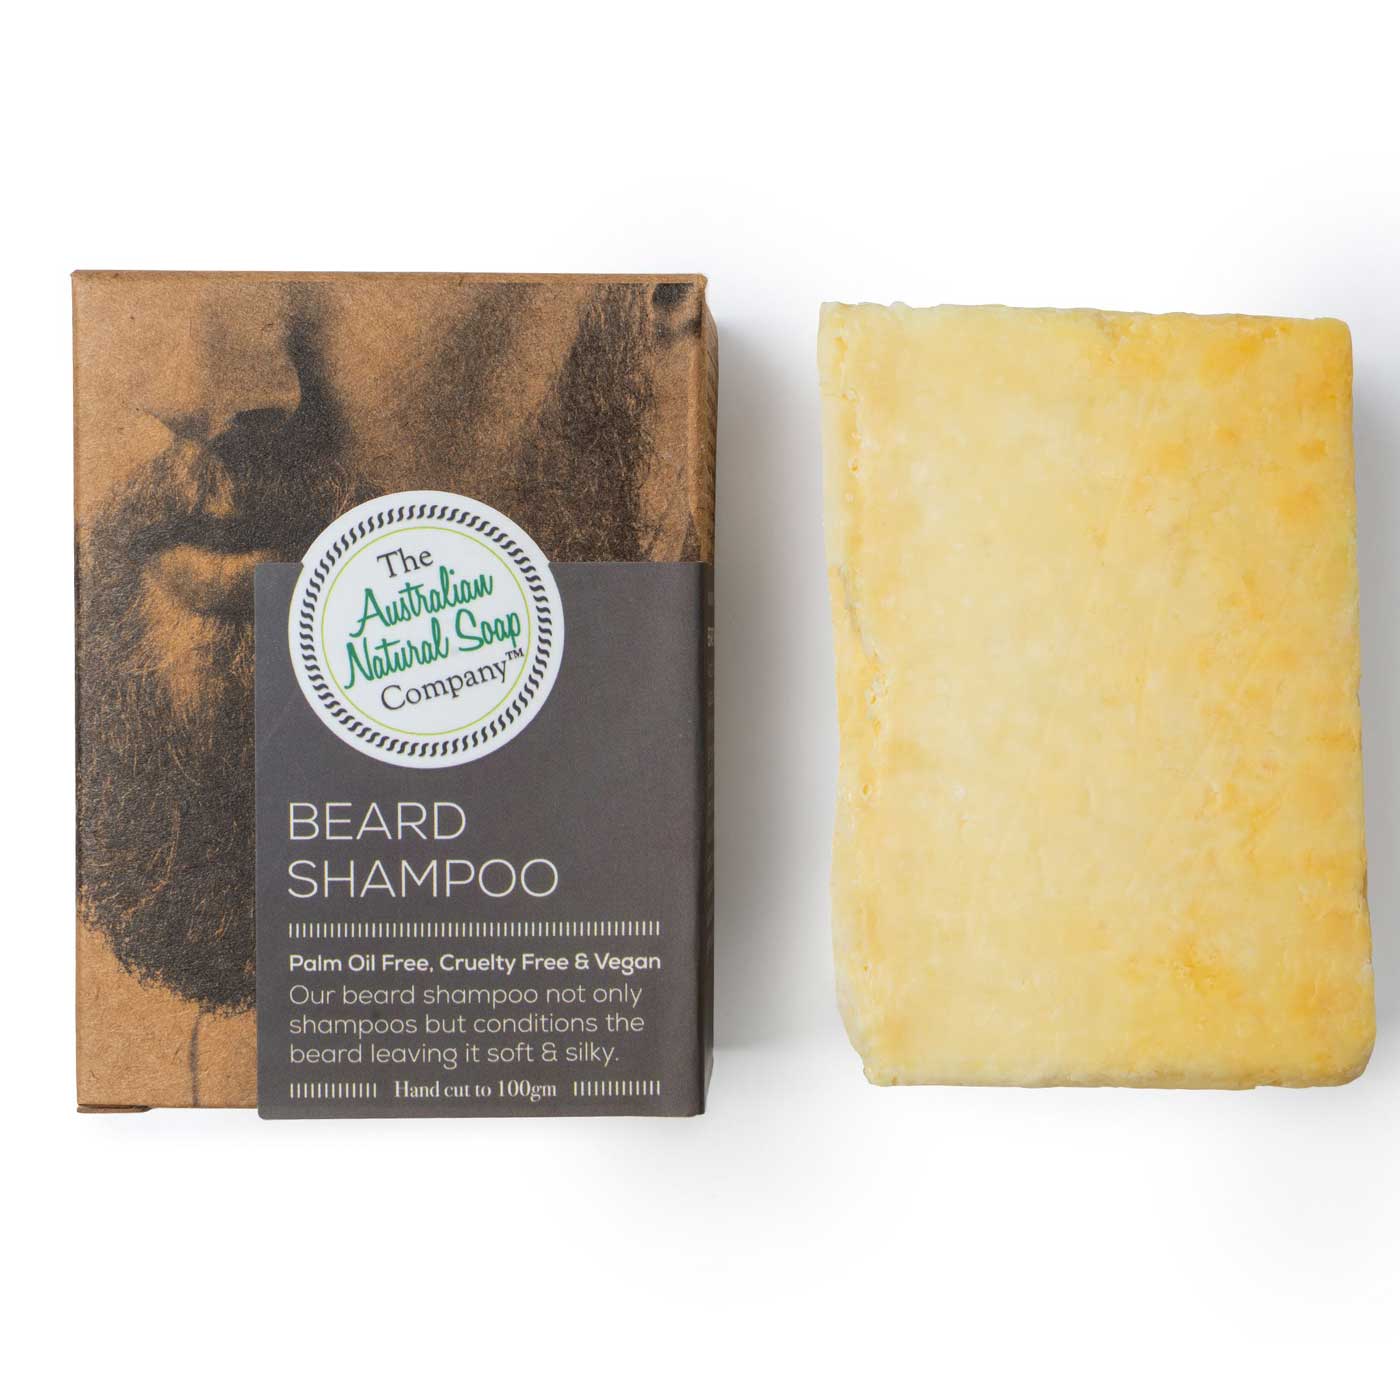 The Australian Natural Soap Company Beard Shampoo. Adelaide Eco Shop Diminish.